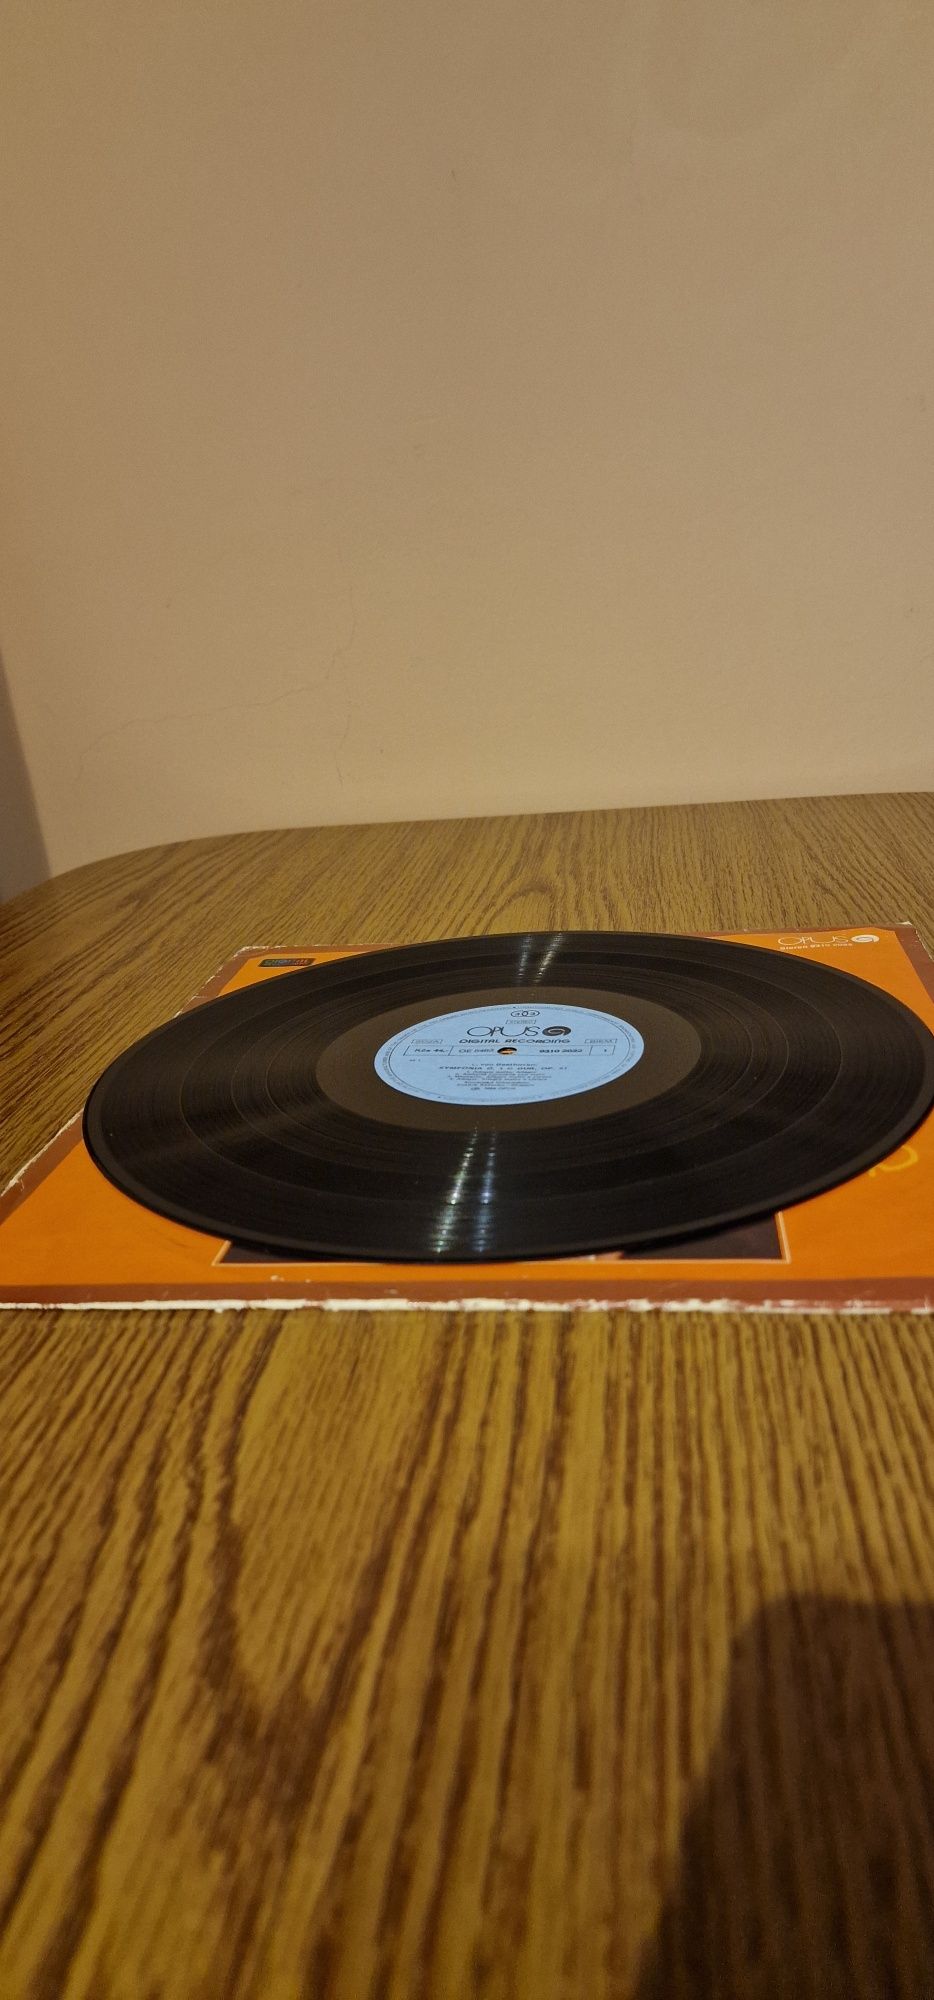 Beethoven Płyta Winylowa, Vinylowa, gramofon, winyl, vinyl